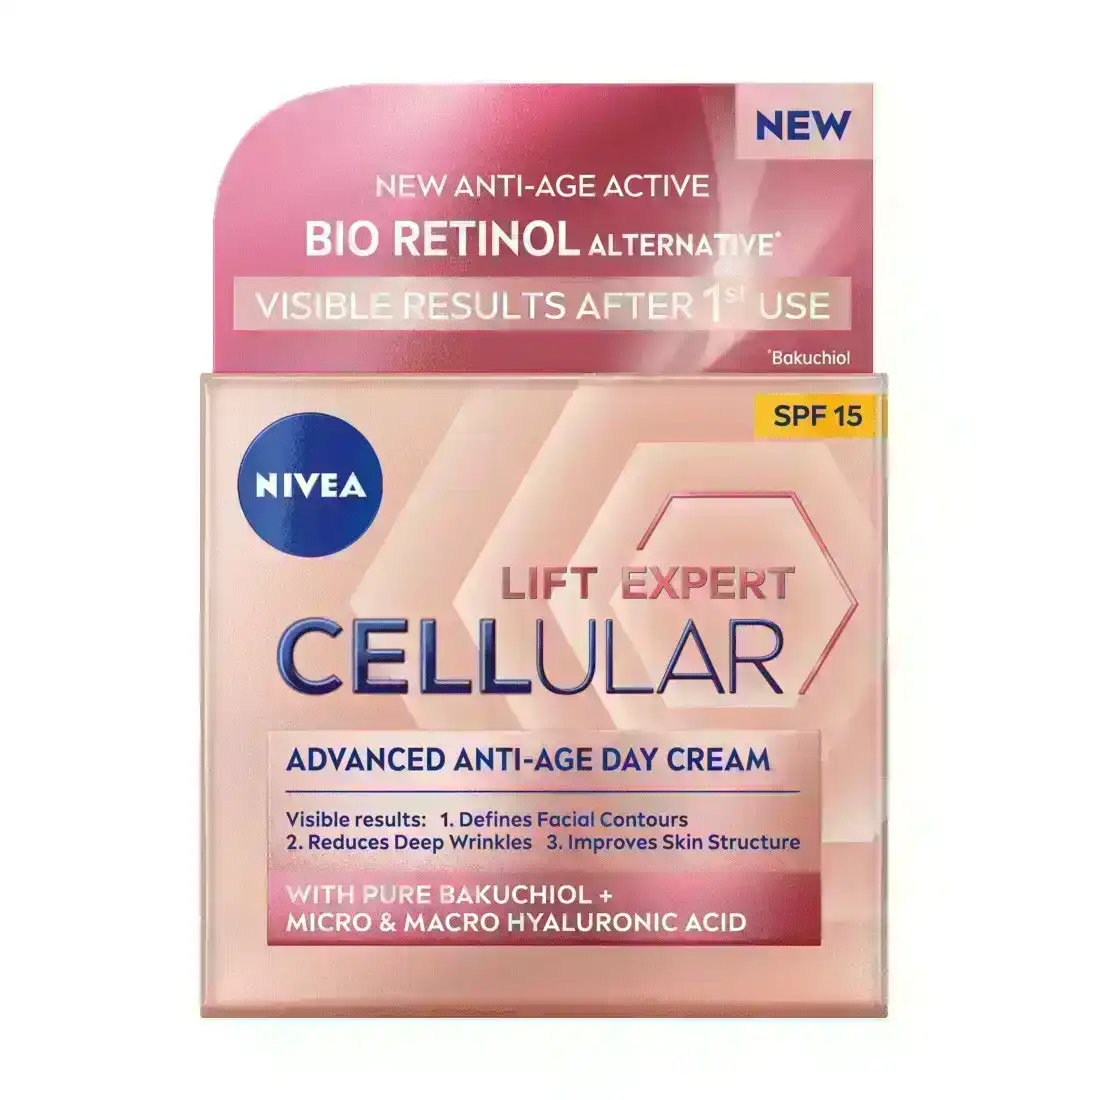 Nivea Cellular Lift Expert Advanced Anti-Age Day Cream SPF15 50ml